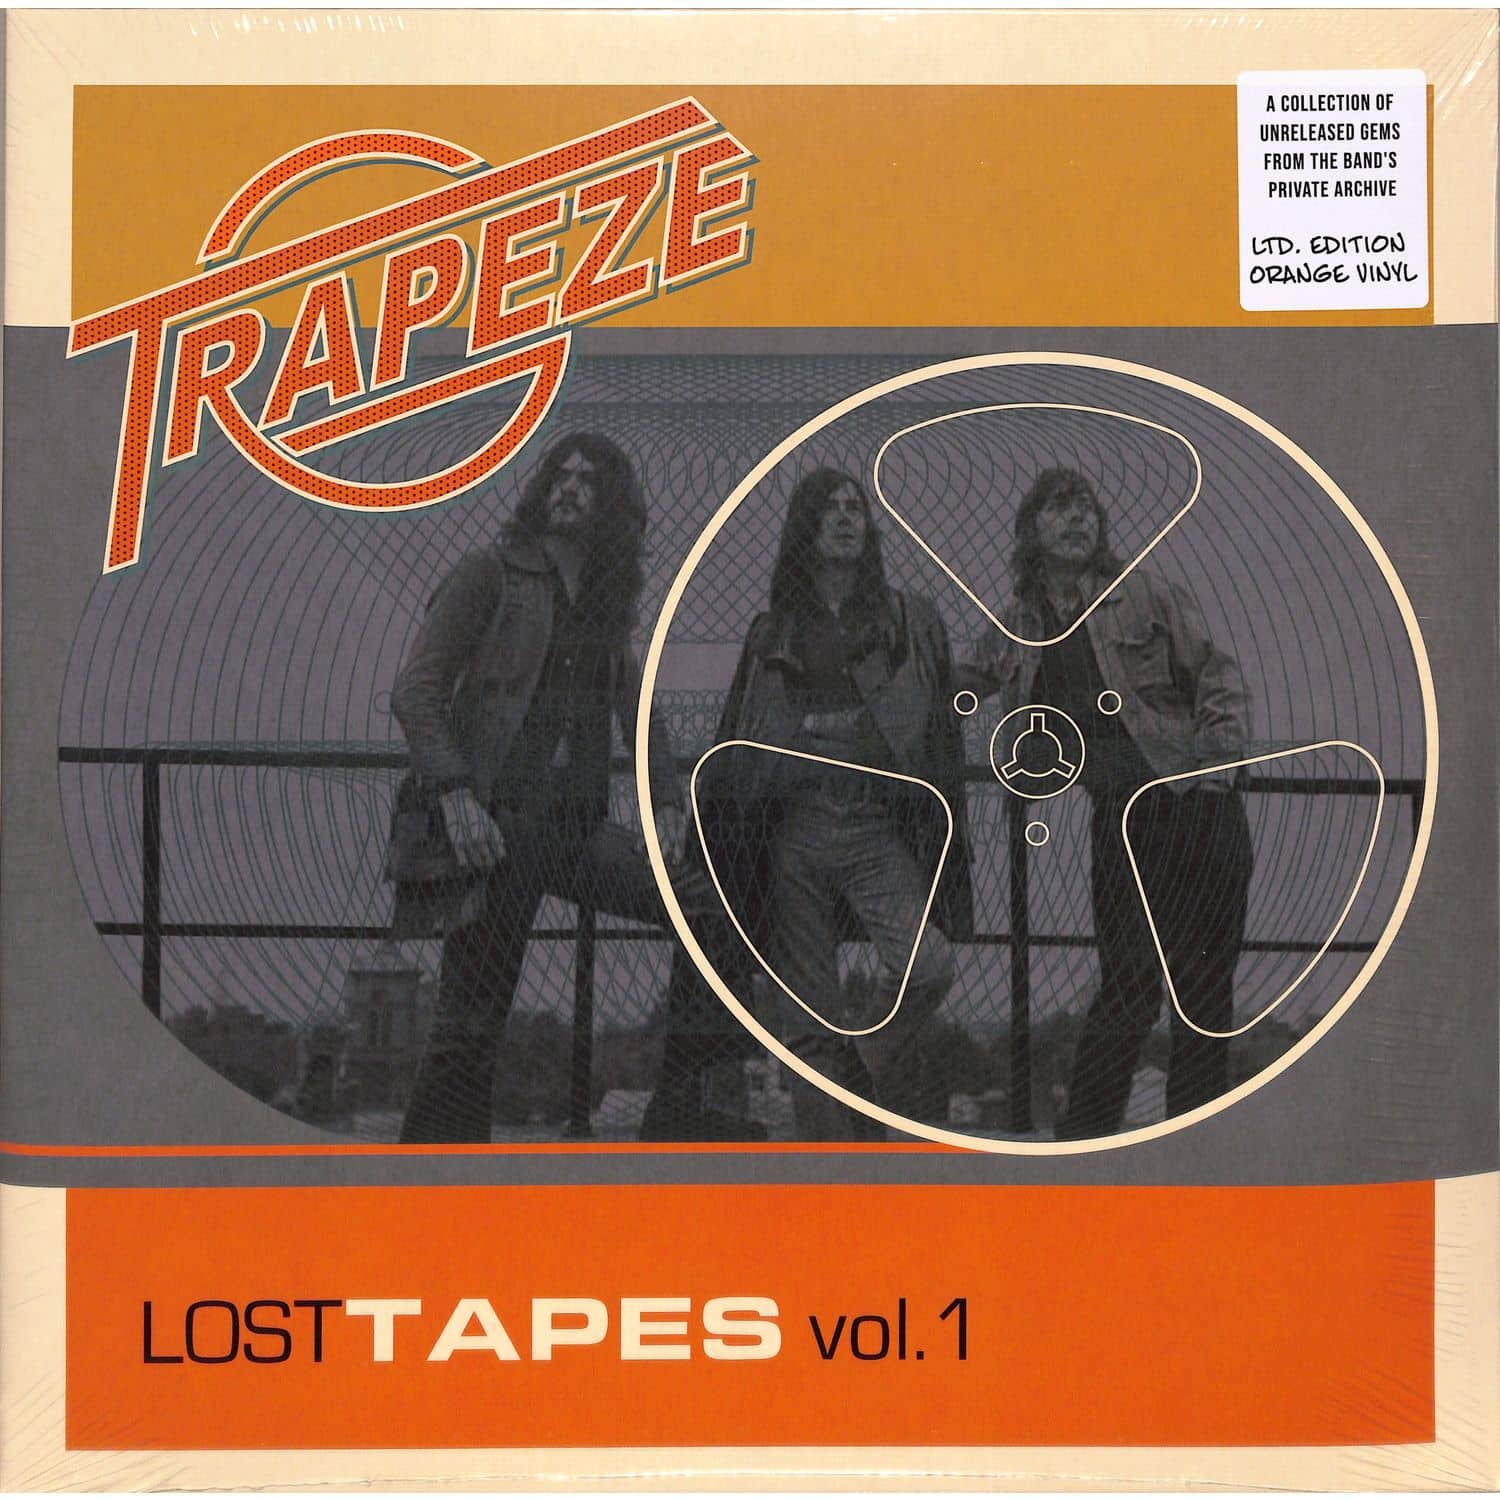 Trapeze - LOST TAPES VOL. 1 